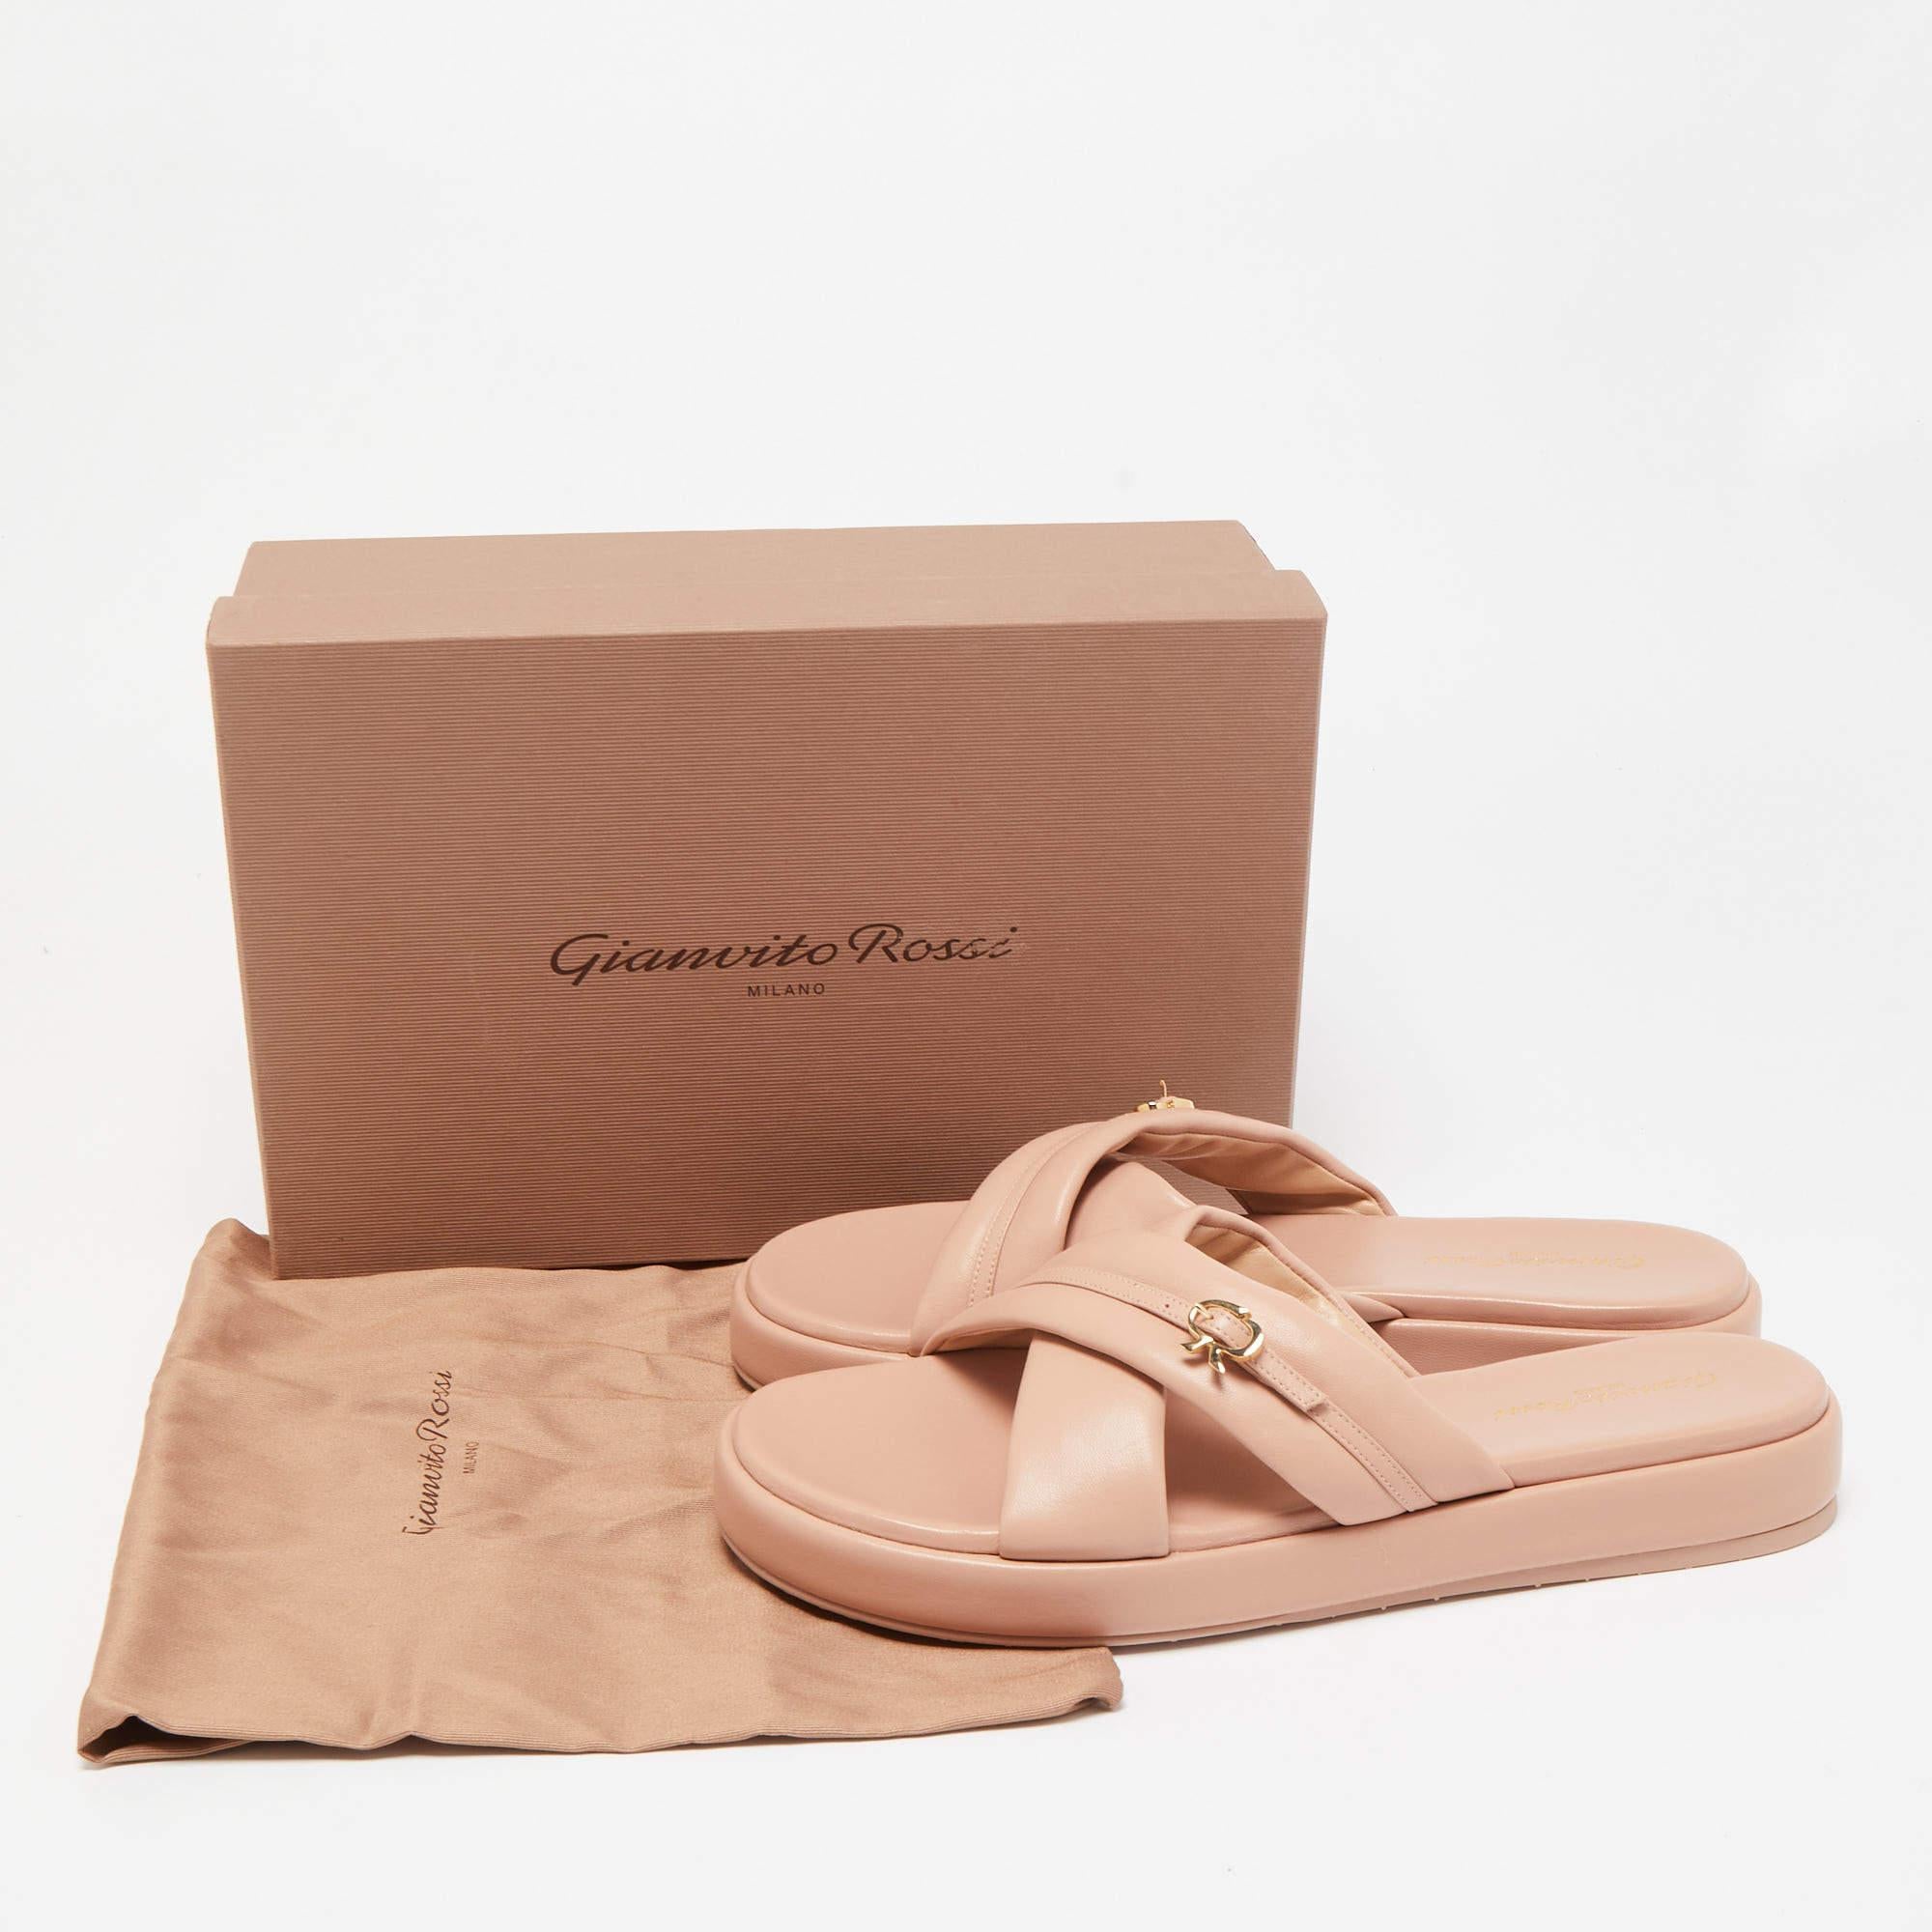 Gianvito Rossi Beige Leather Flatofrm Slide Sandals Size 41.5 2